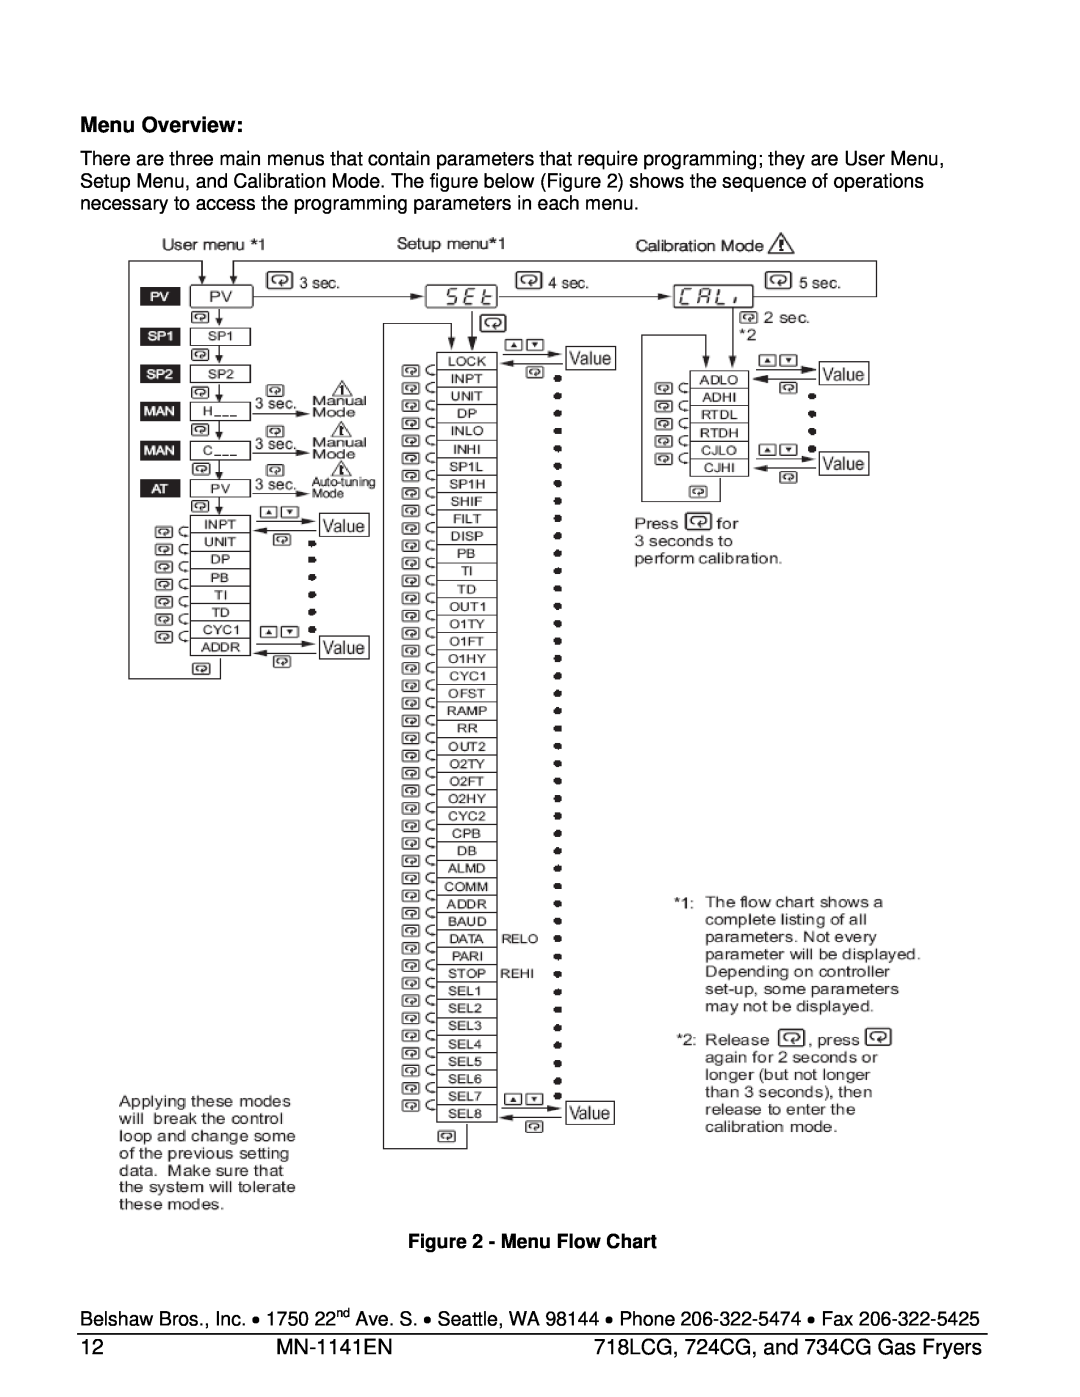 Belshaw Brothers manual Menu Overview, MN-1141EN, 718LCG, 724CG, and 734CG Gas Fryers, Menu Flow Chart 